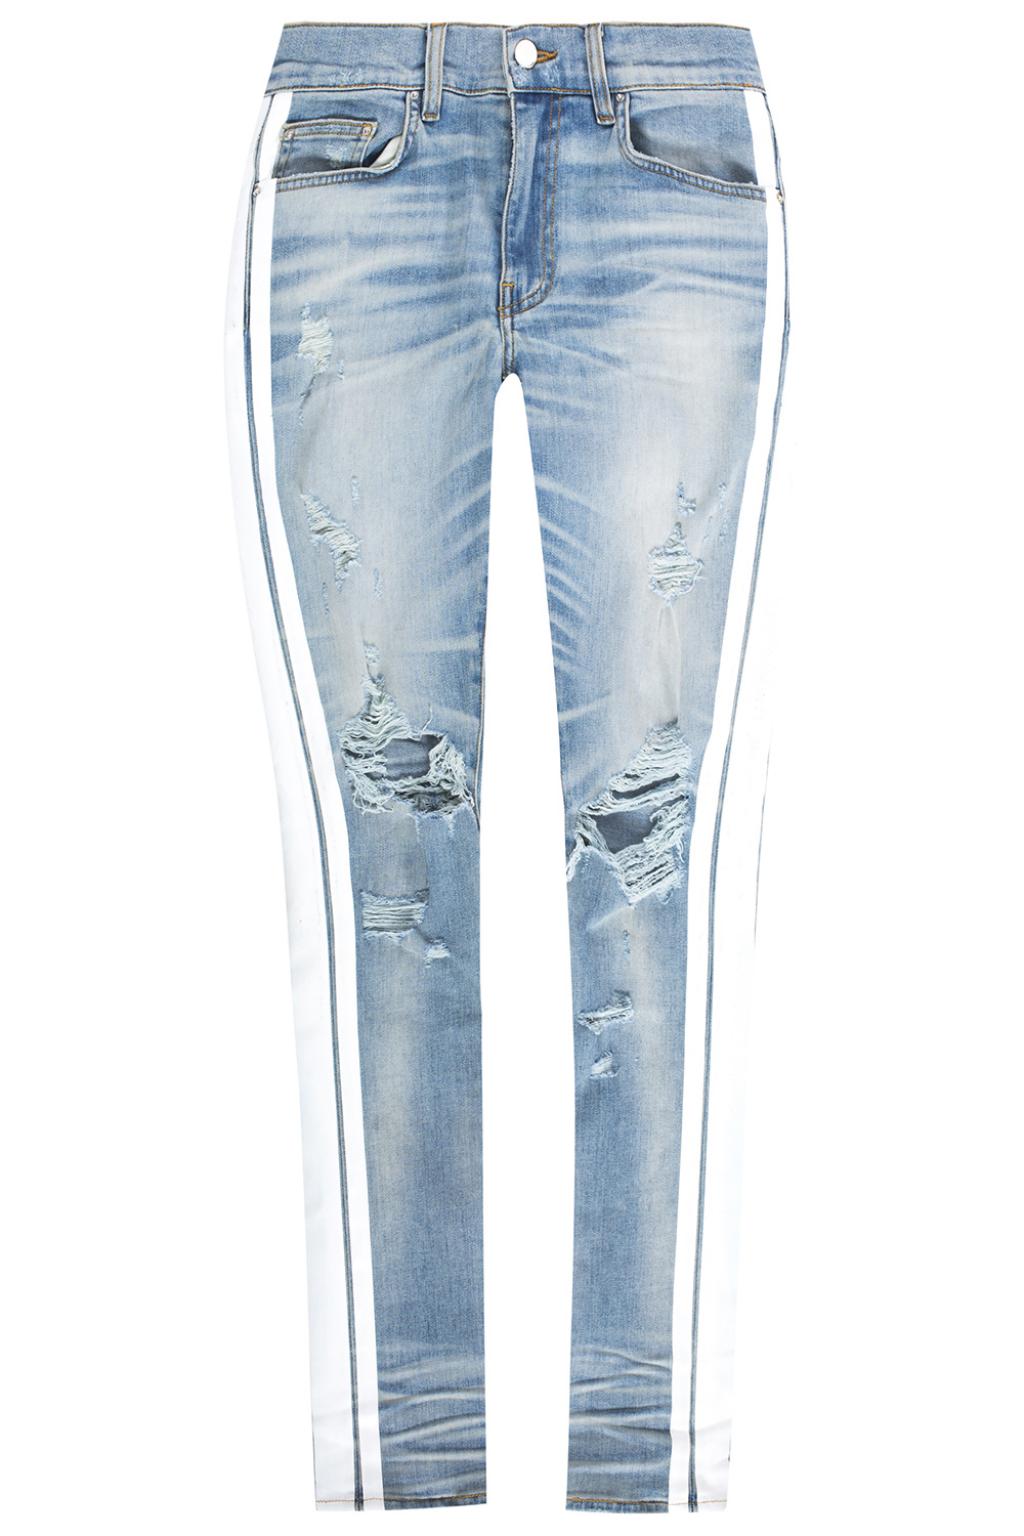 amiri white striped jeans